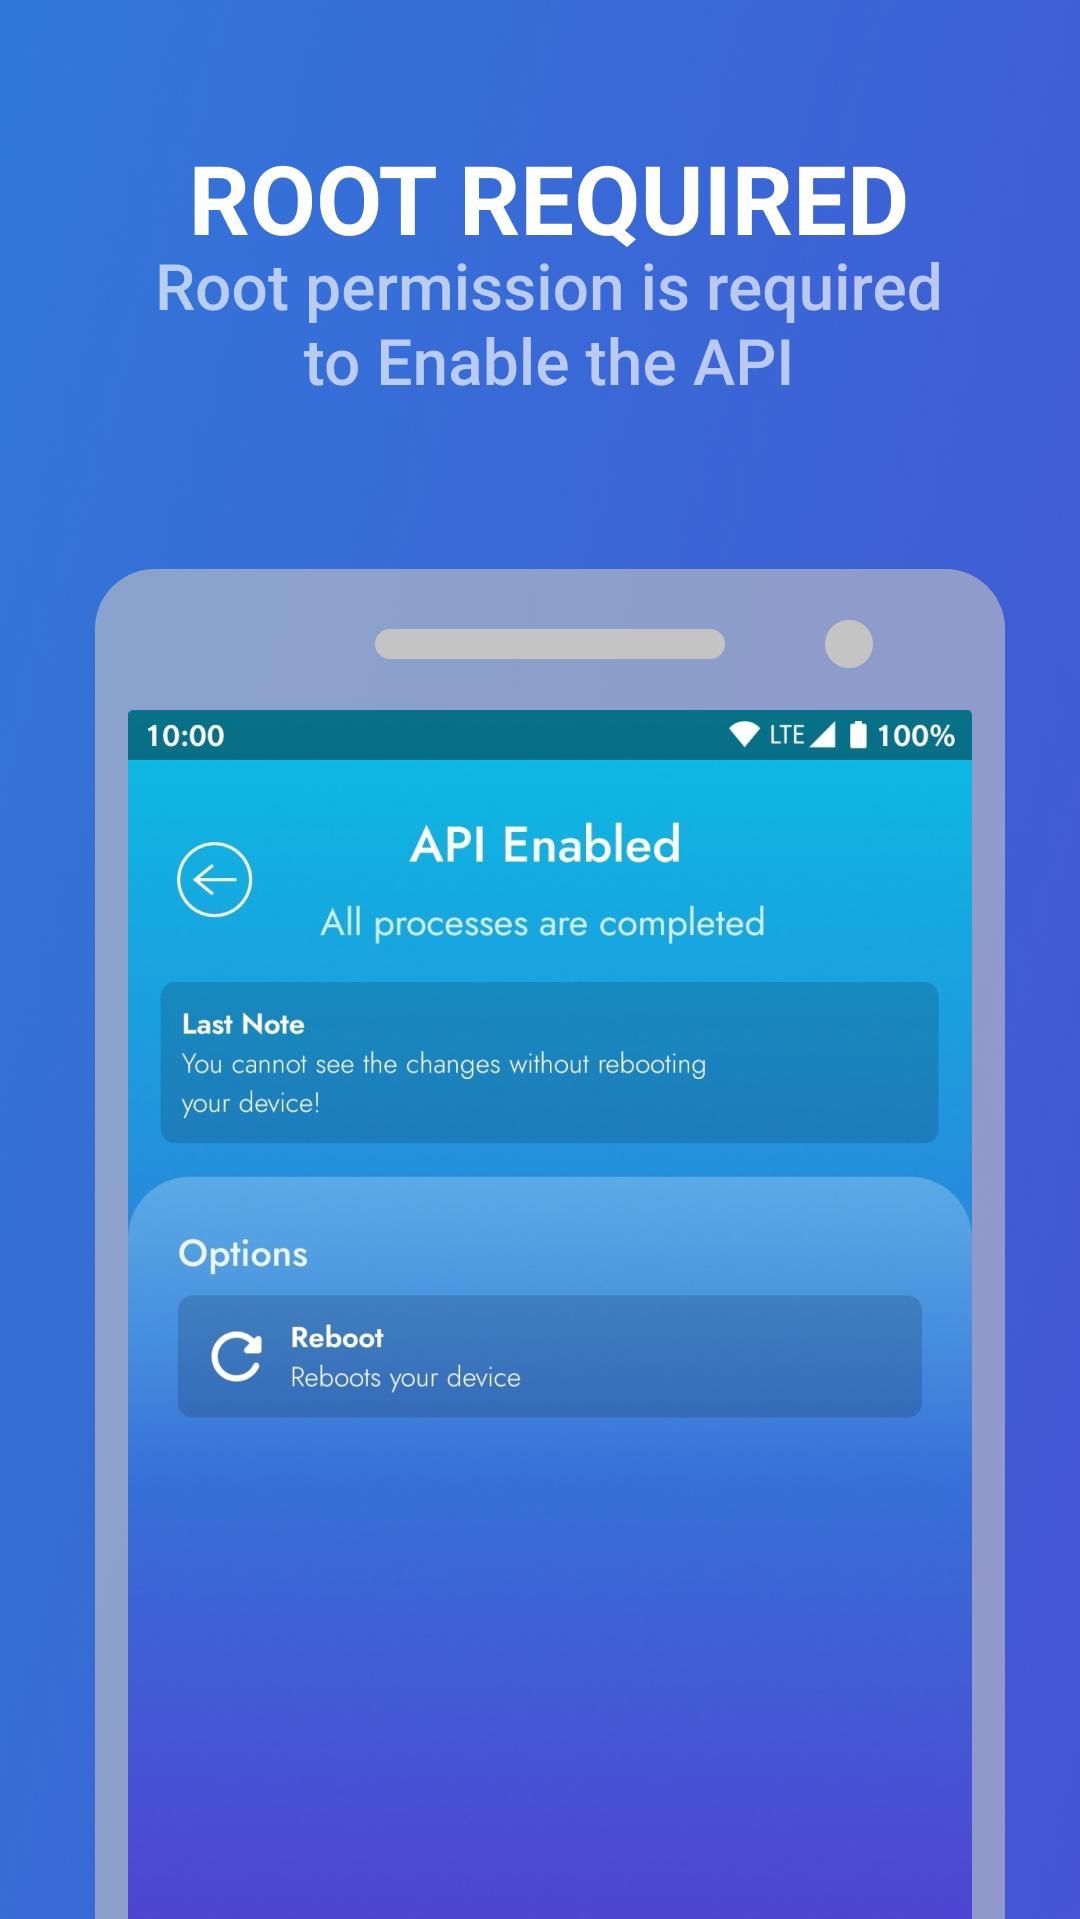 Camera2 API Enabler APK for Android Download